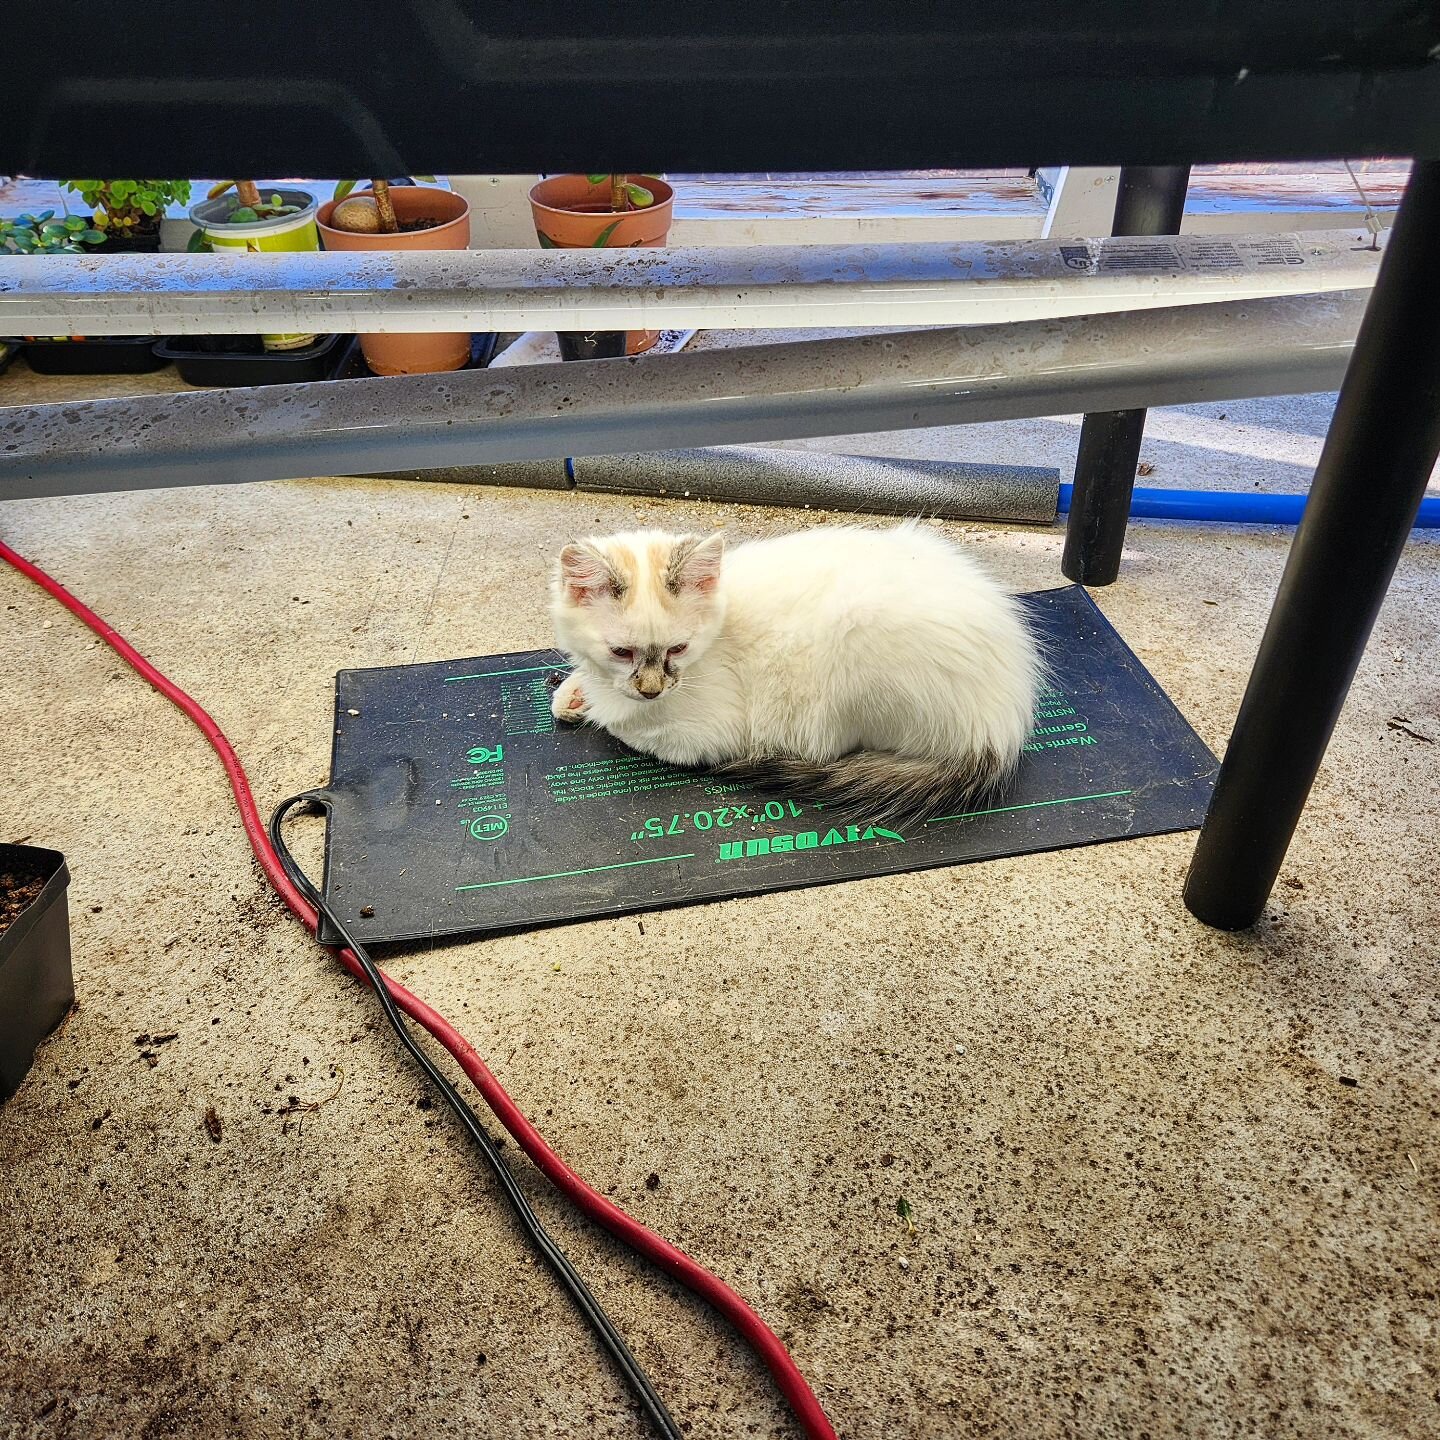 How to trap a kitten. 

This is Bootsie, our daughter's kitten. She's quite smitten with that heat mat. 

#kittensofinstagram #kitten #ragdollkitten #catsofinstagram